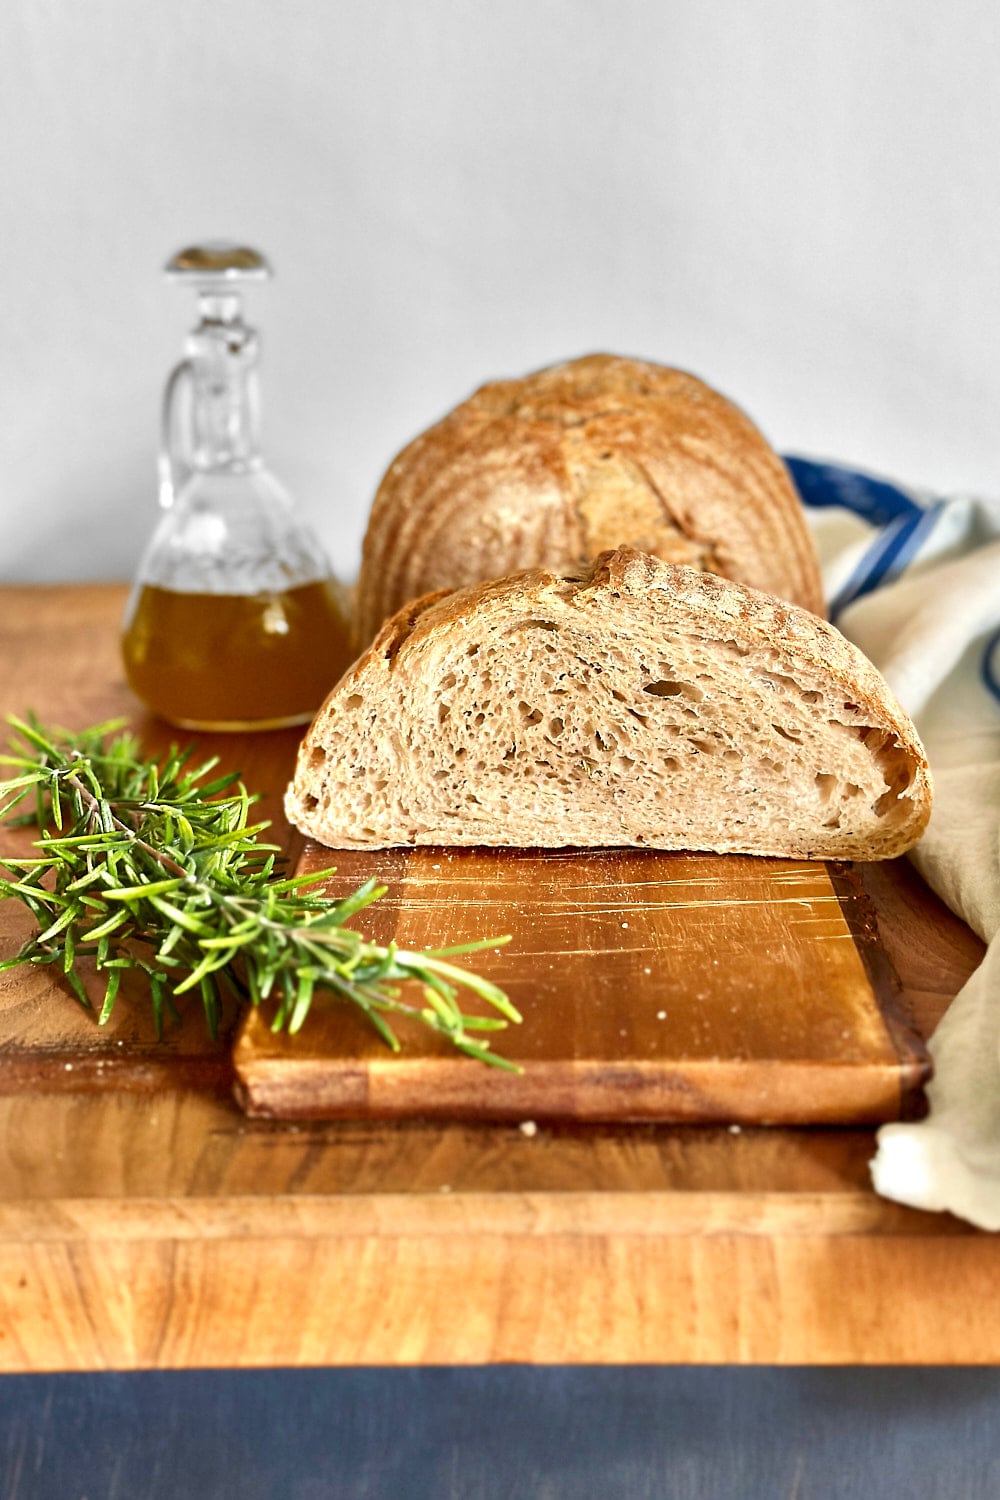 A loaf of rosemary sourdough bread cut in half on a wooden board.